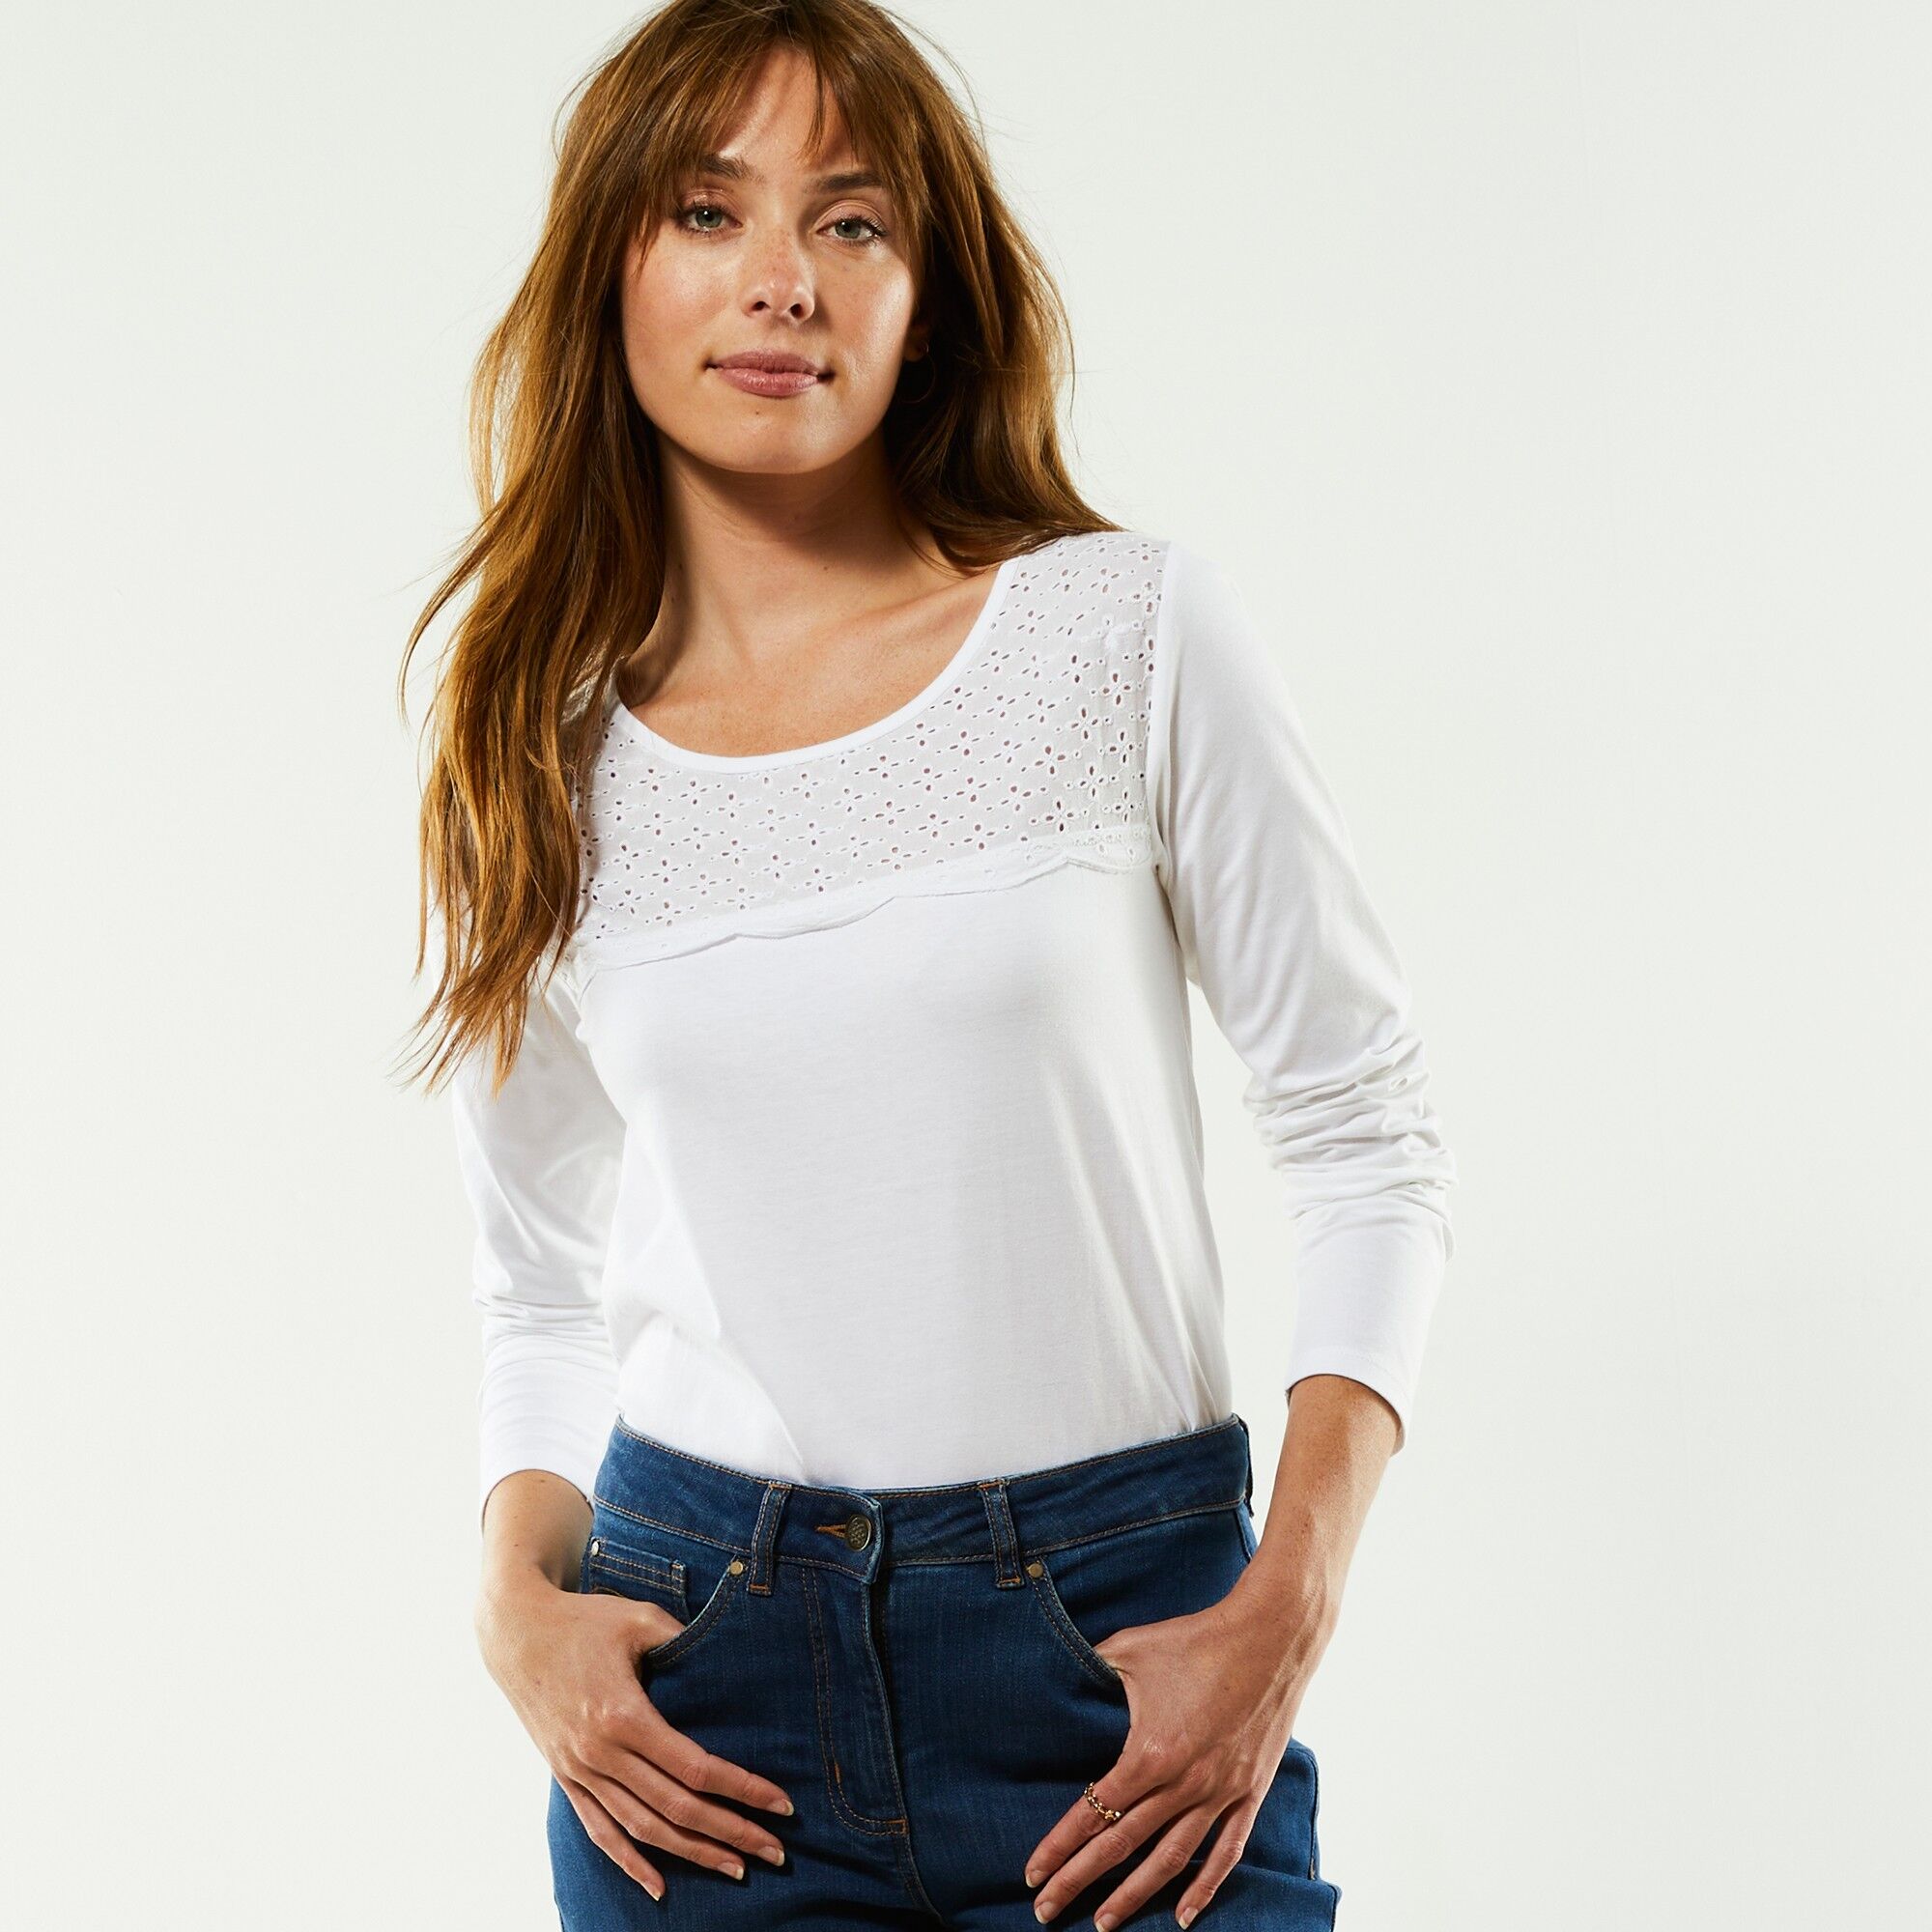 Blancheporte T-shirt Manches Longues, Empiècement Broderie Anglaise - Femme Blanc 34/36